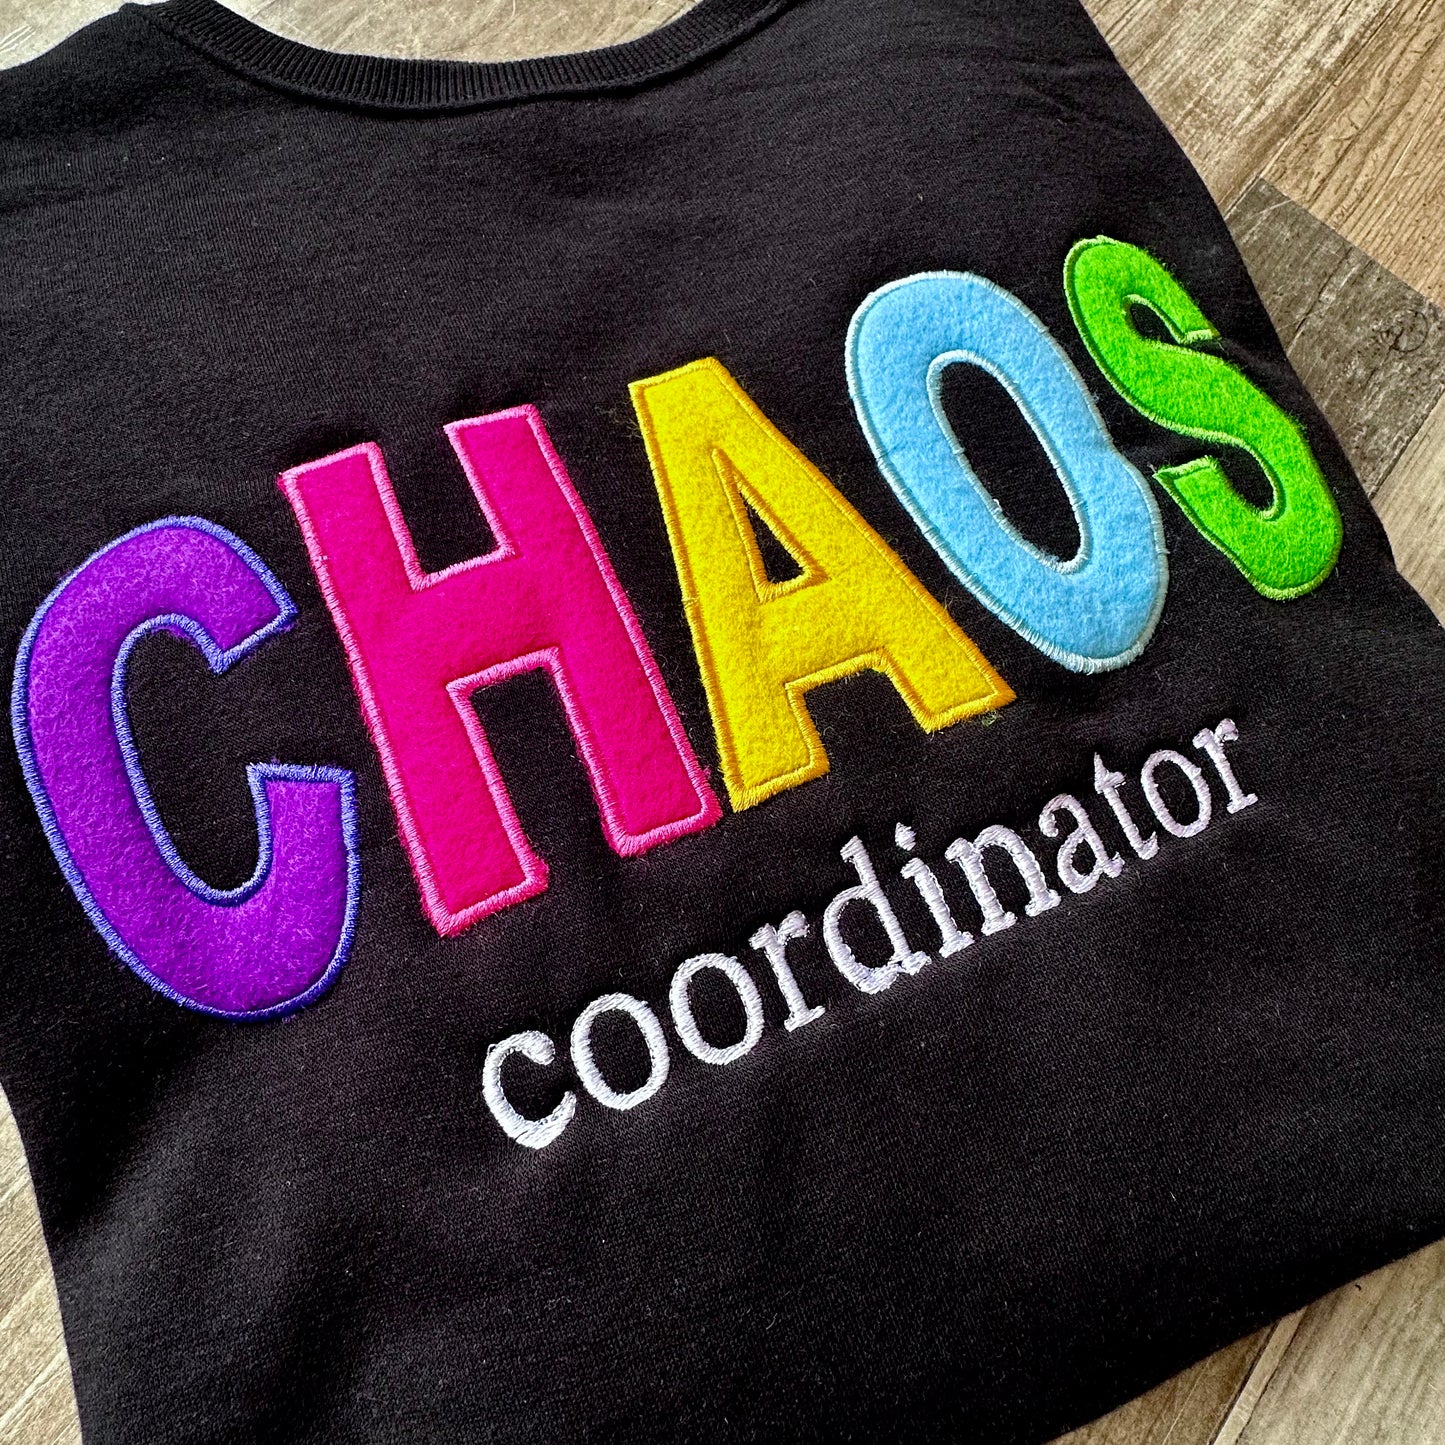 Chaos coordinator embroidered sweatshirt